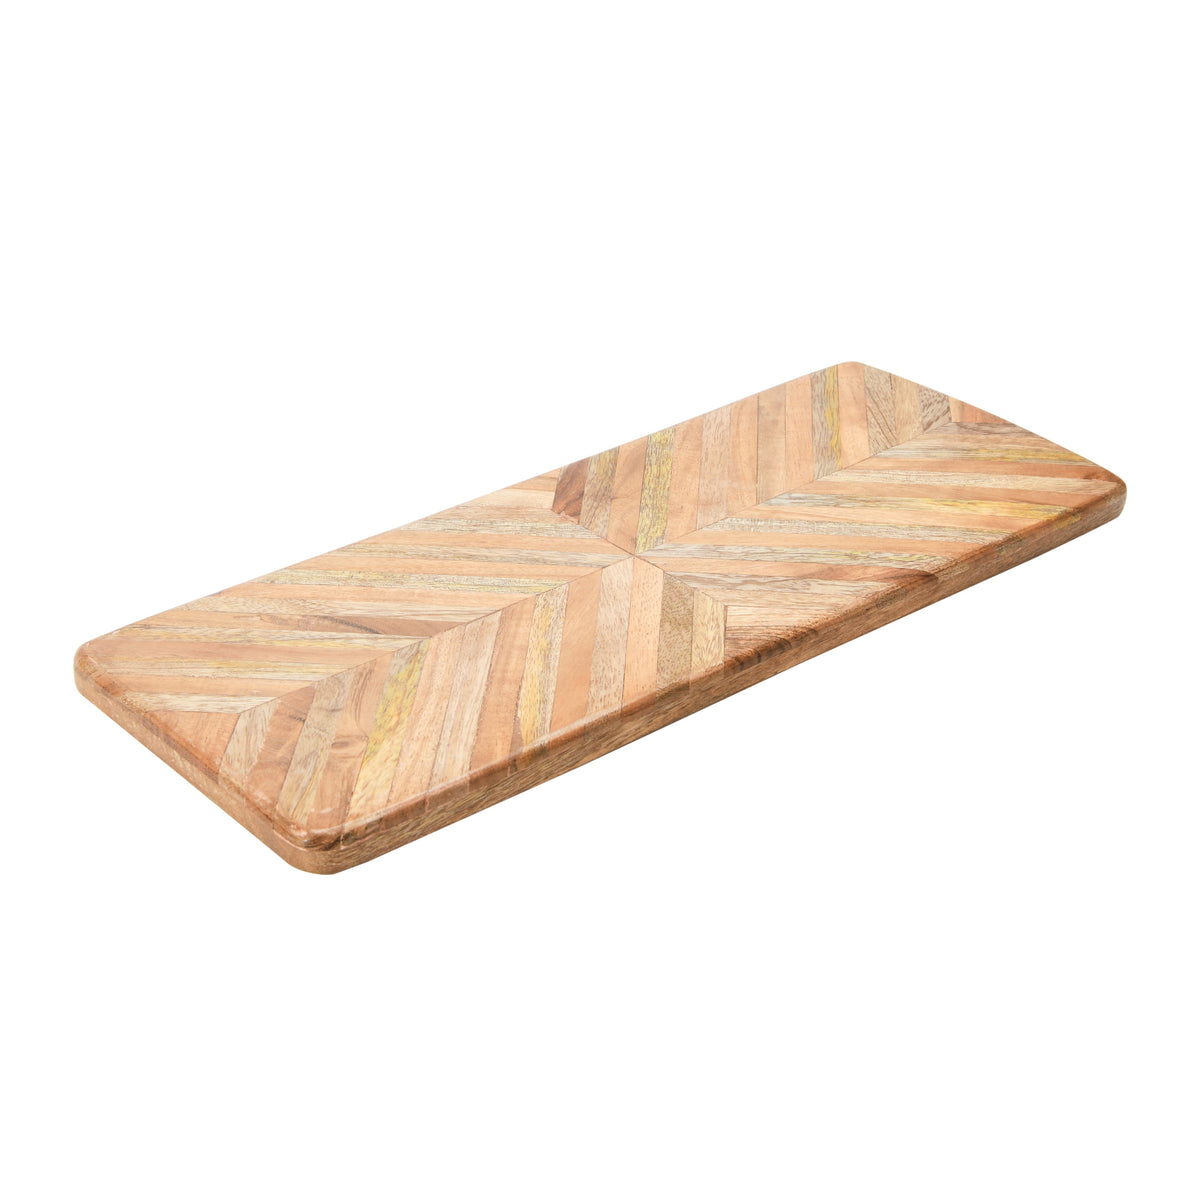 Wood Cheese/Cutting Board